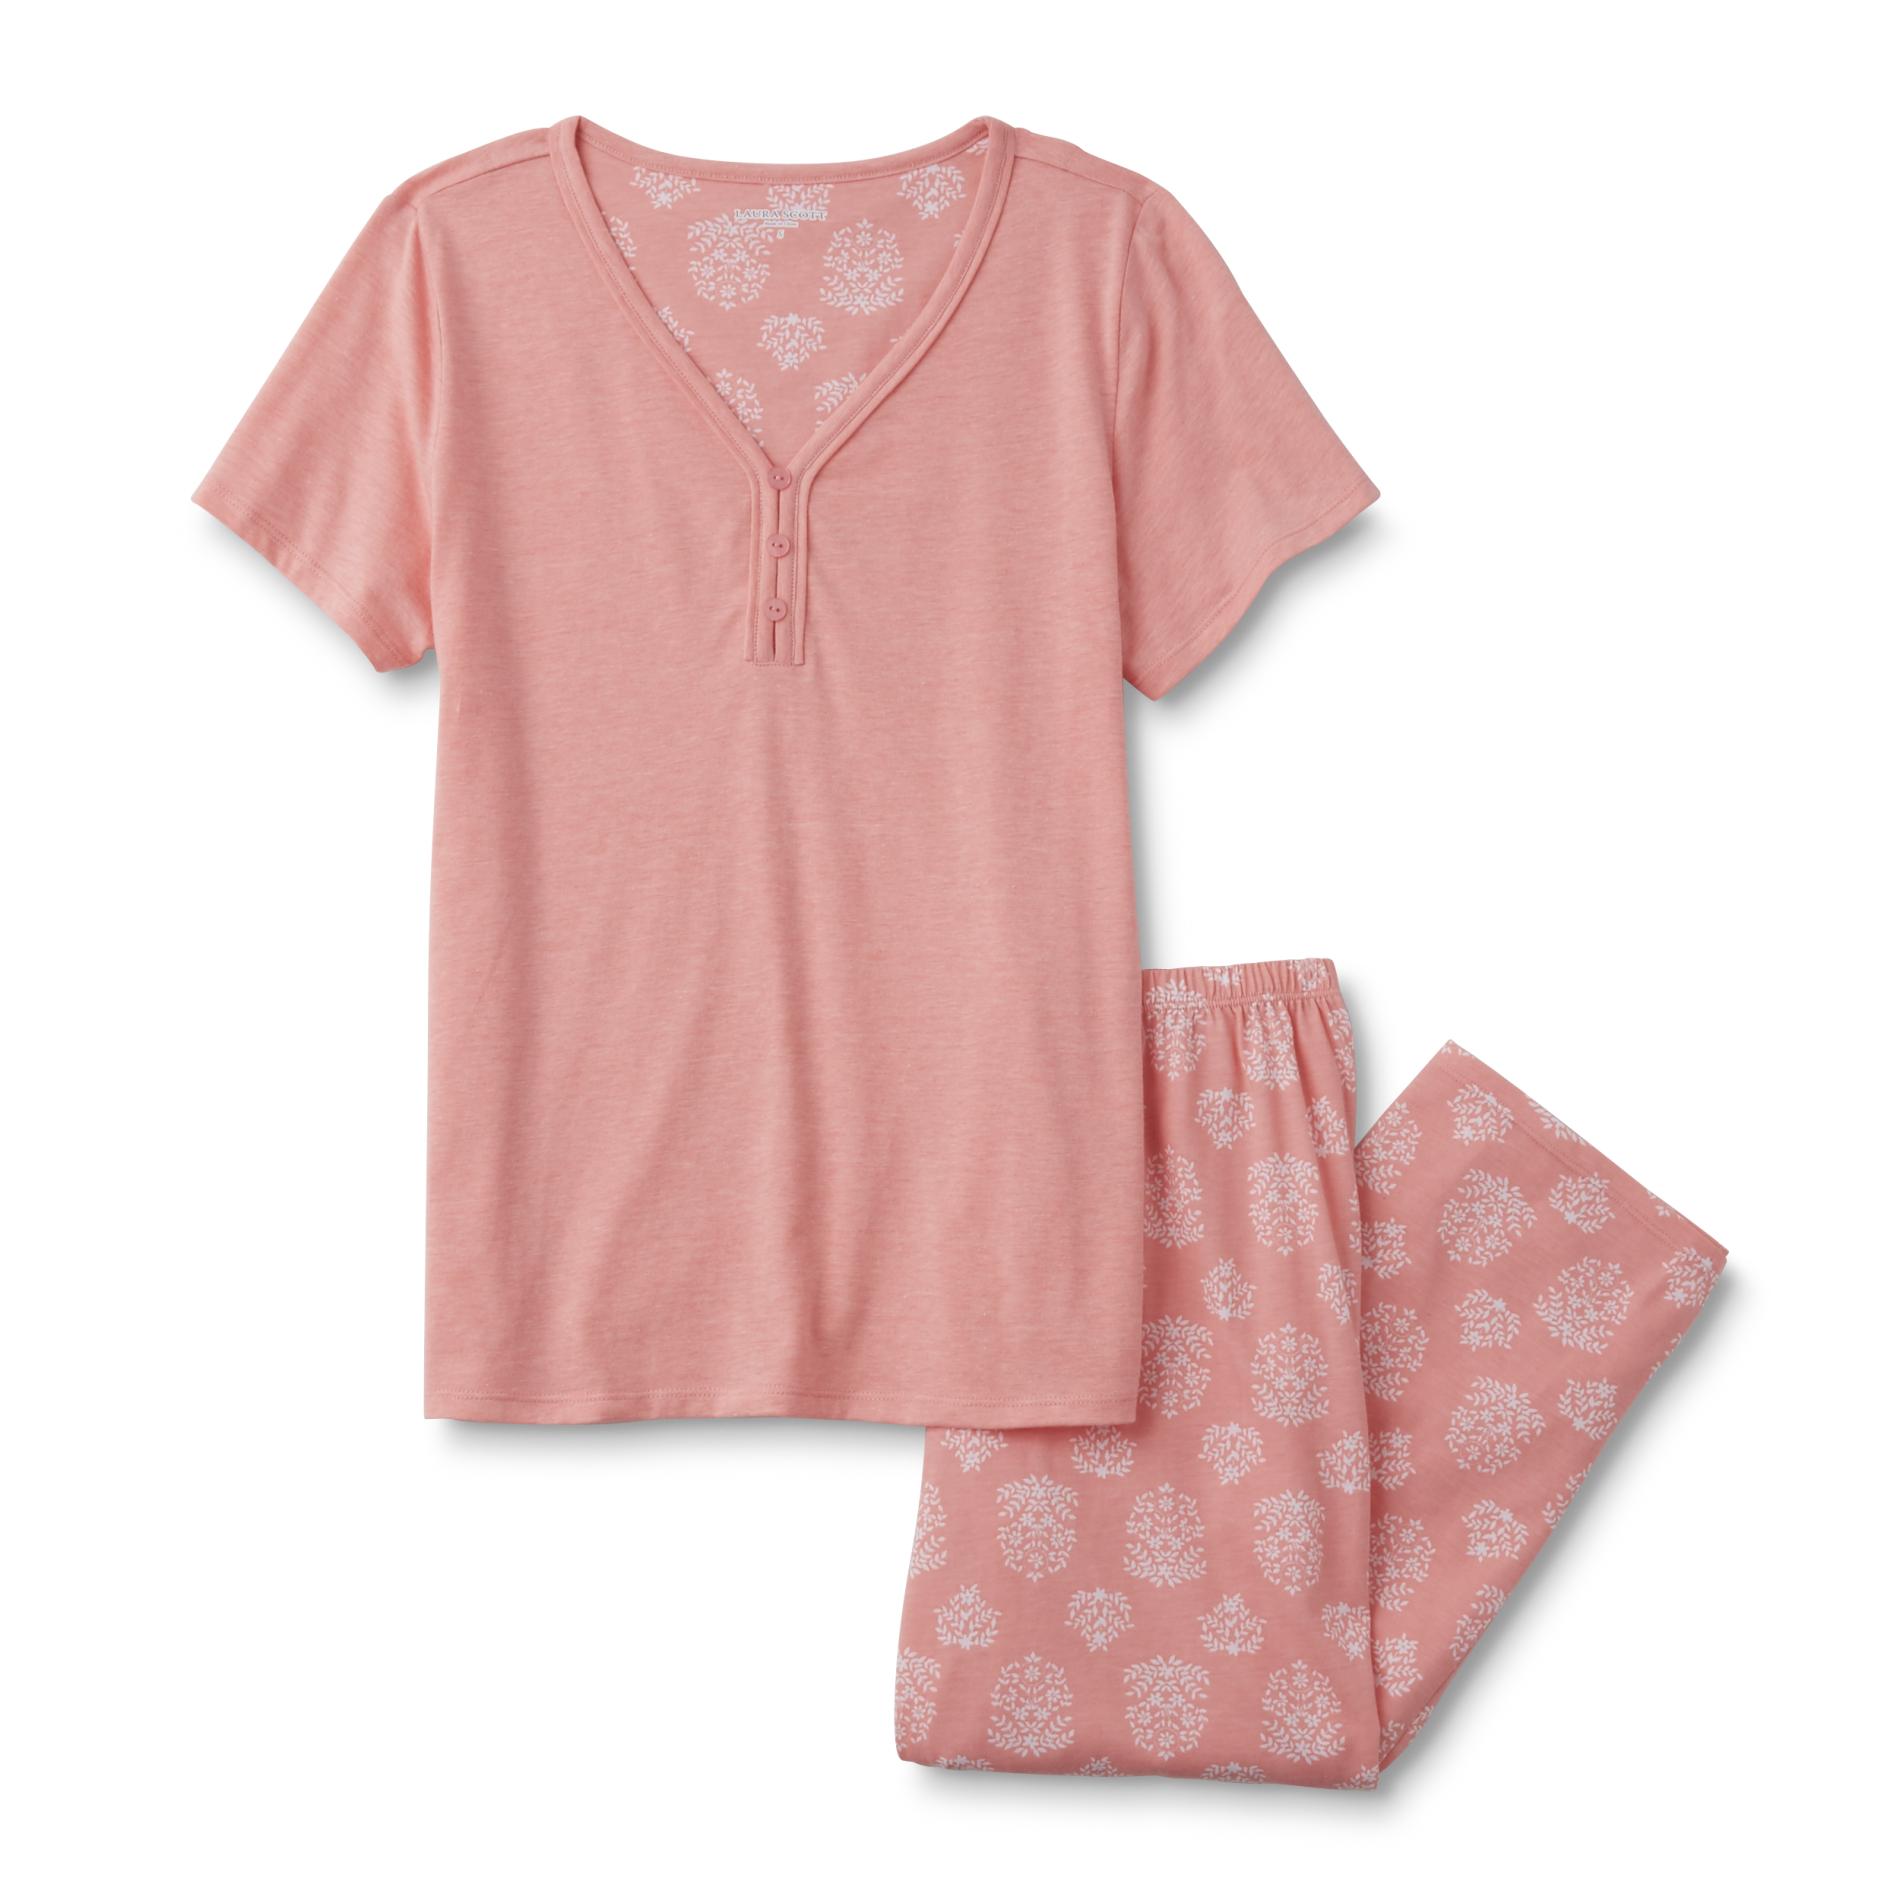 Laura Scott Women's Short-Sleeve Pajama Shirt & Pants - Floral